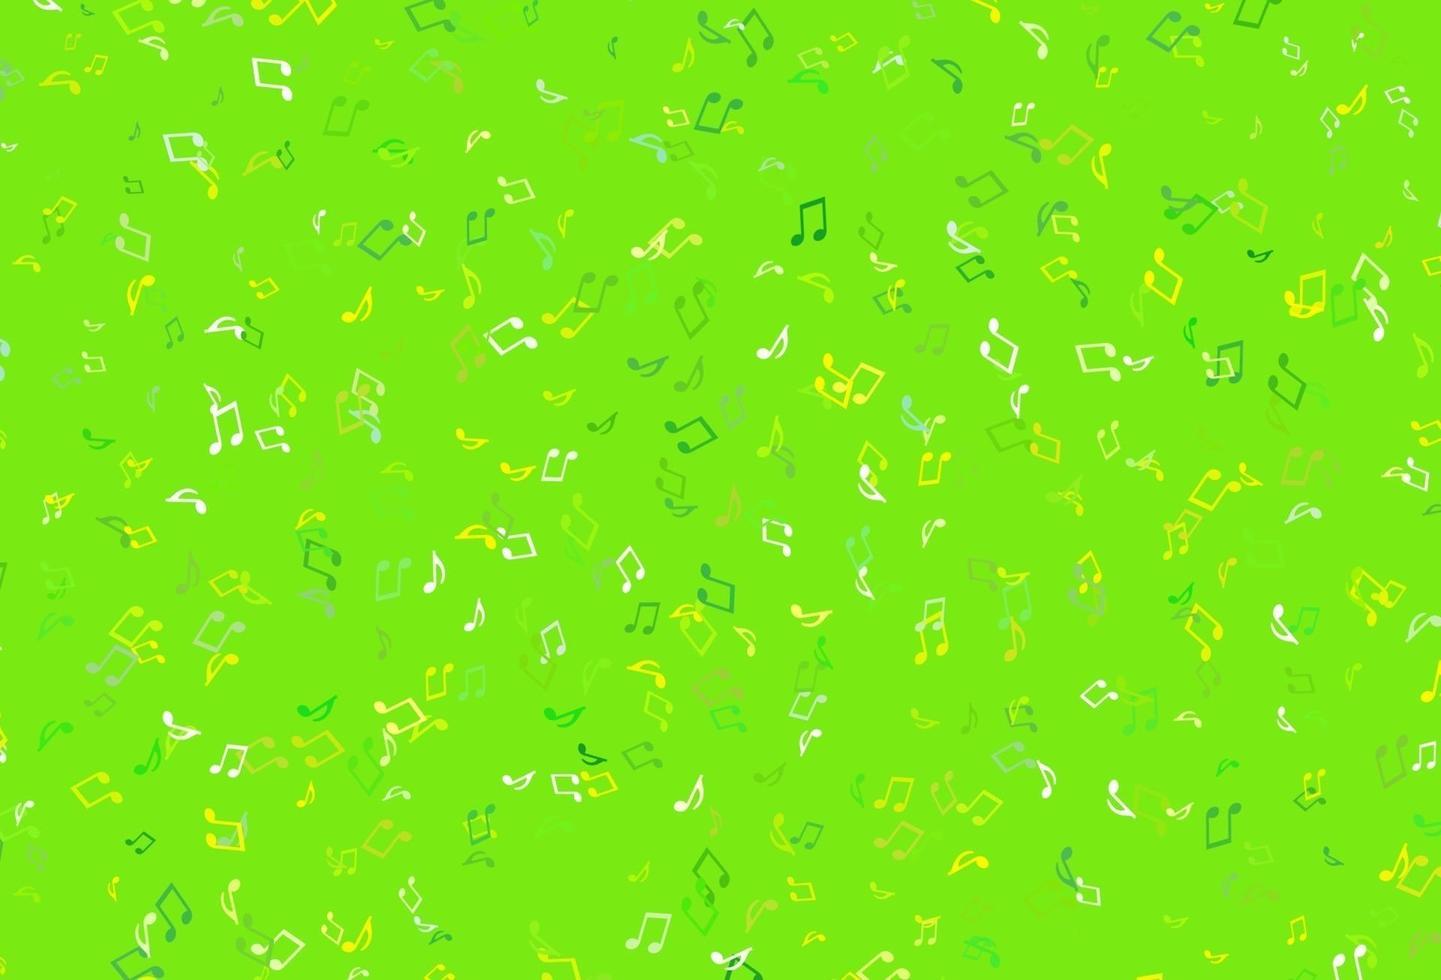 textura de vector de colores claros con notas musicales.